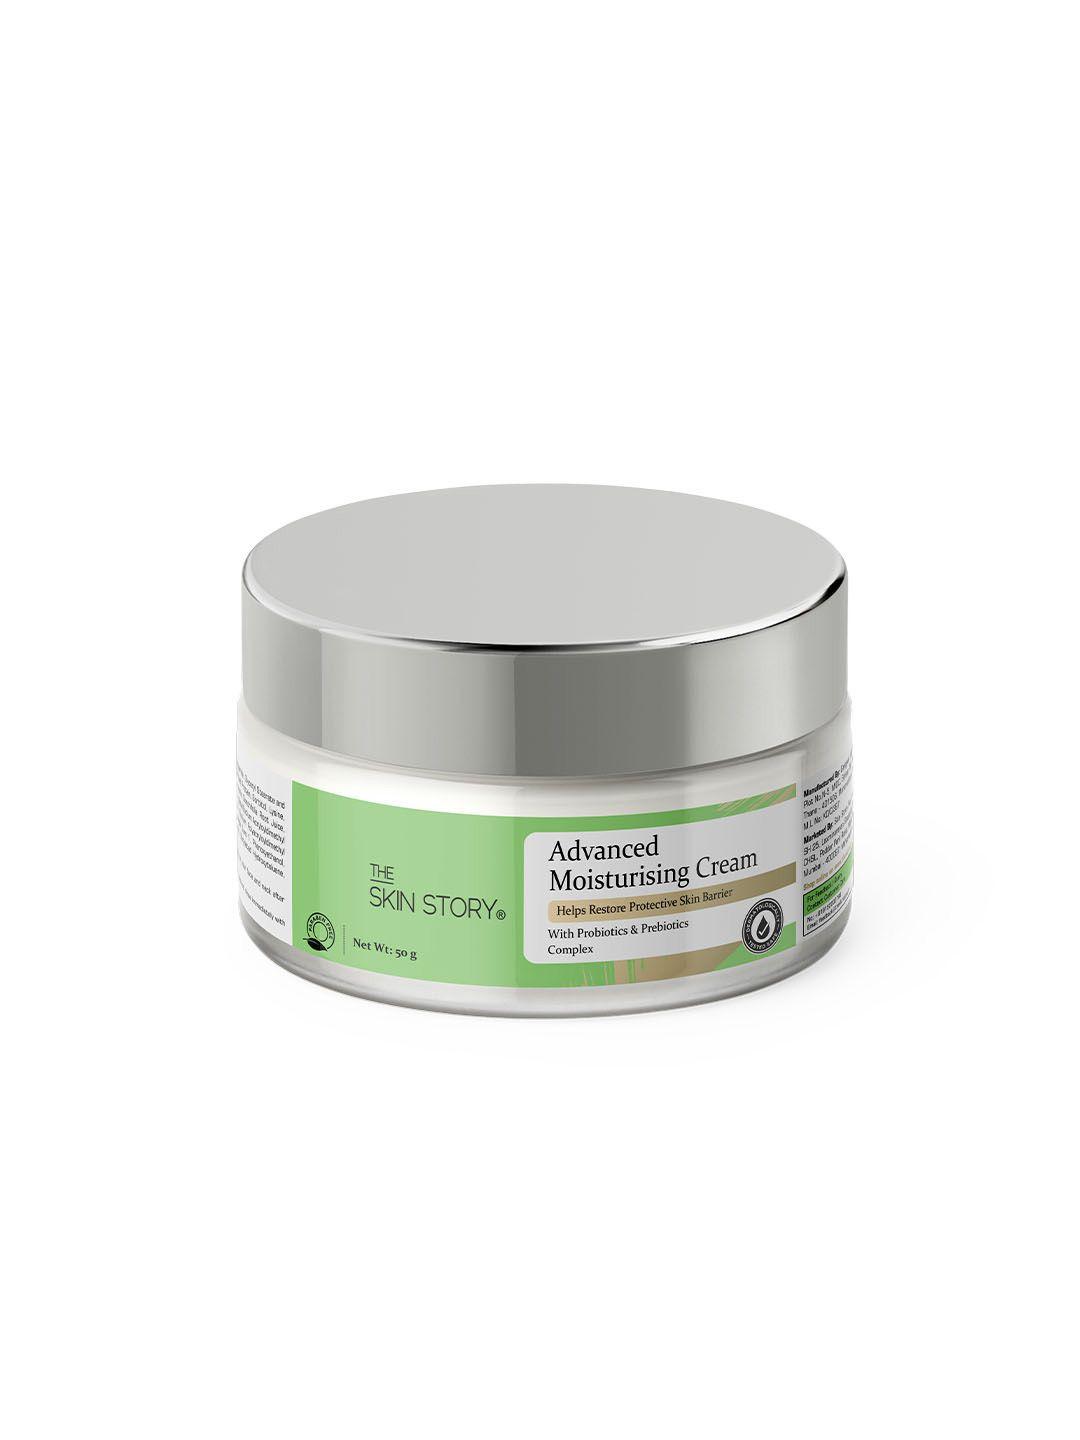 the skin story advanced moisturising cream with probiotics & prebiotics complex - 50g